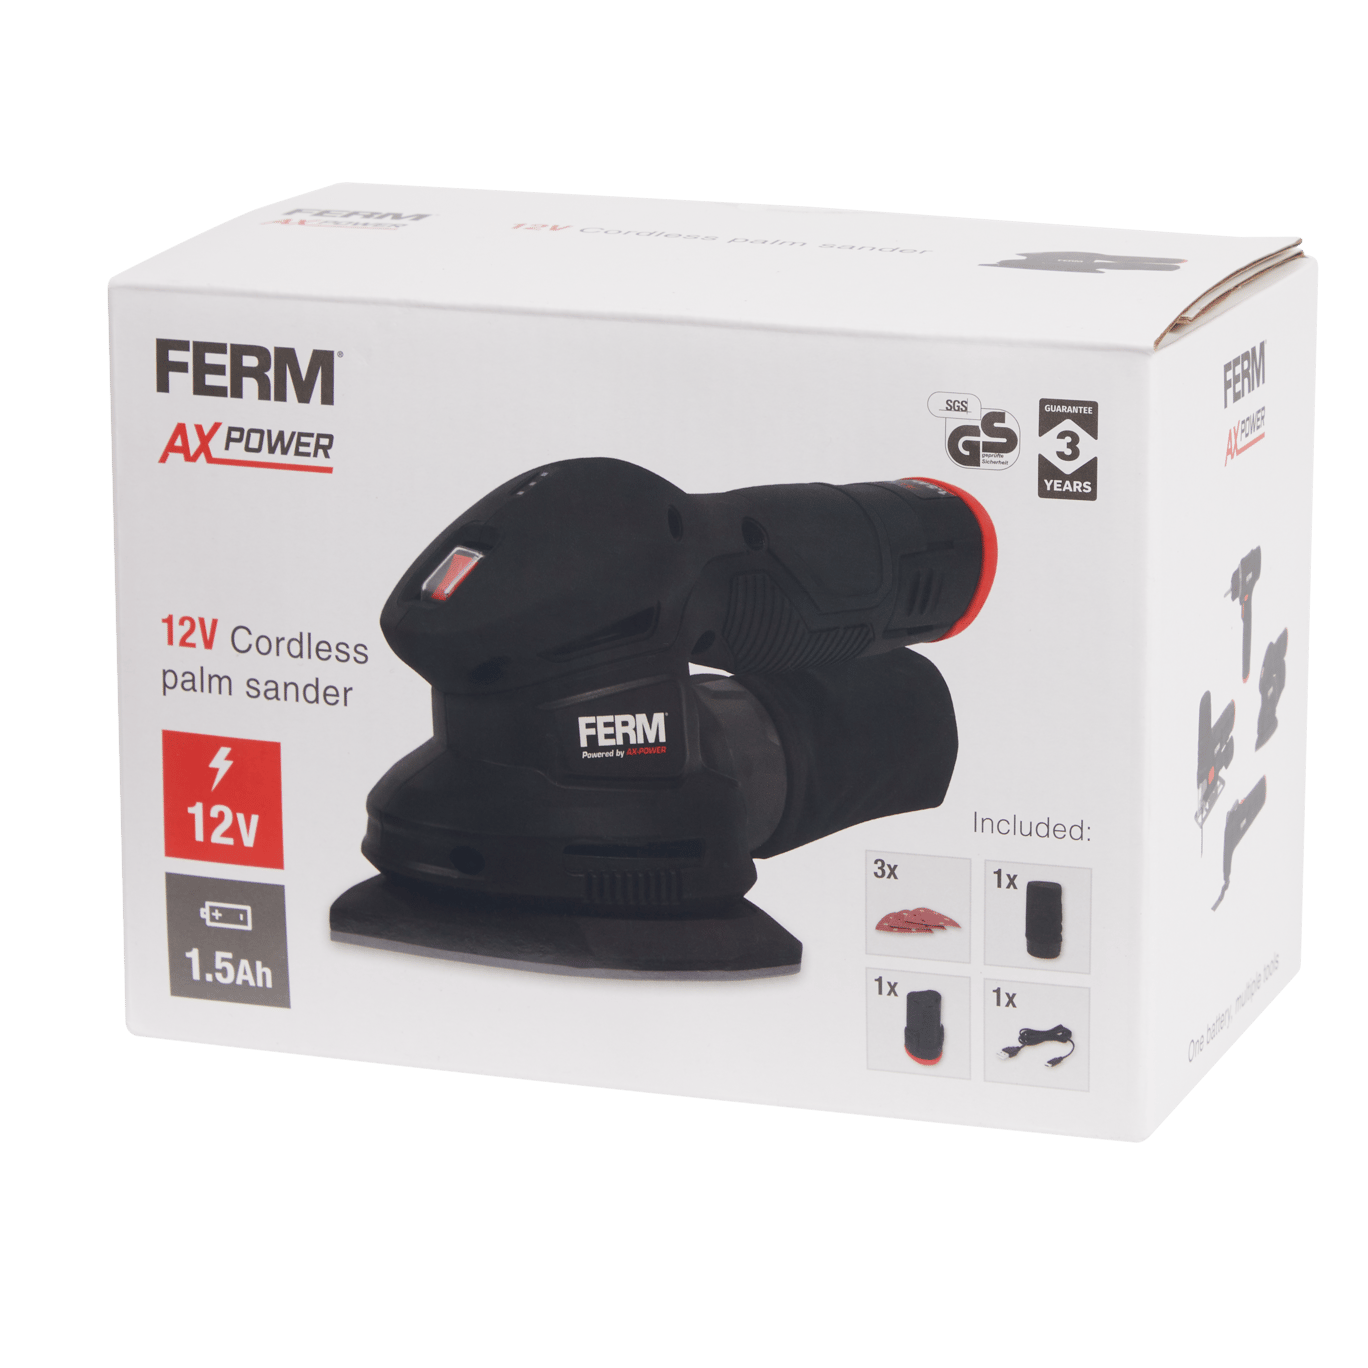 FERM AX-Power Akku-Schleifmaschine